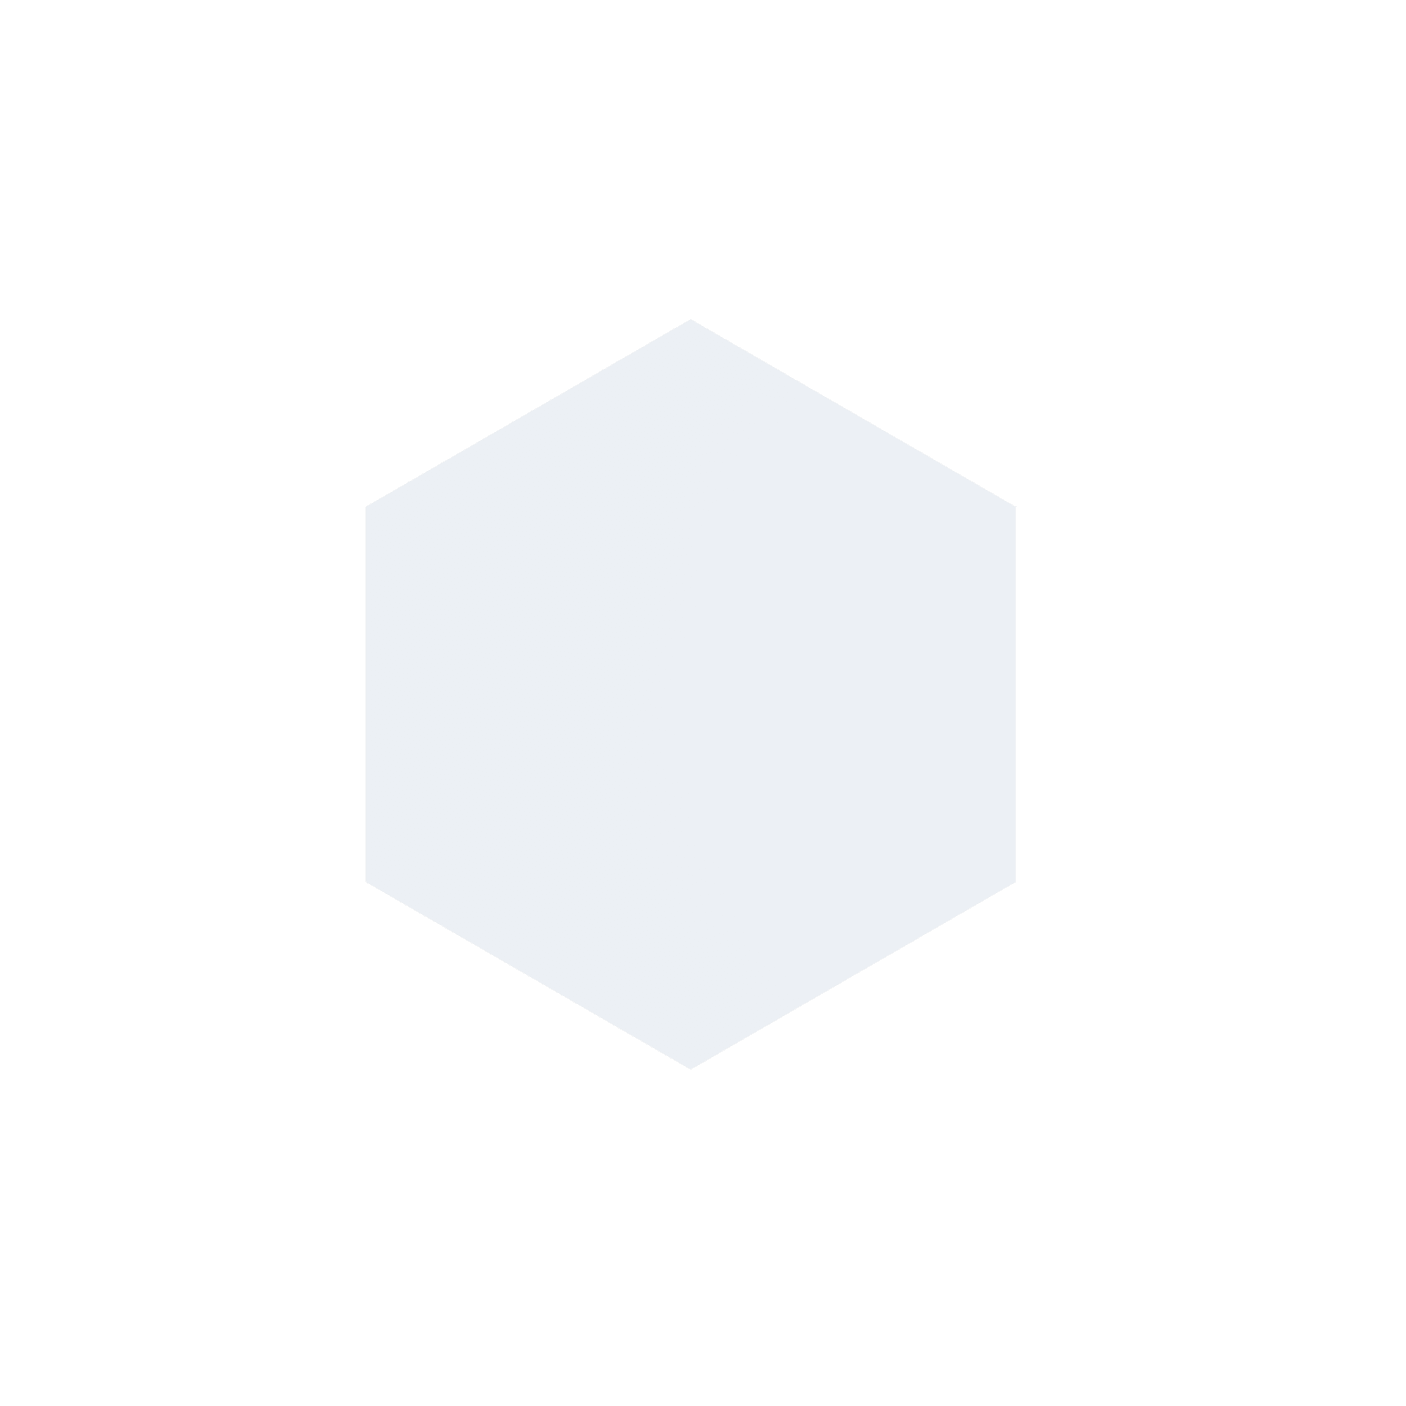 Sienos dekoracija Hexagon, 30x30cm, white